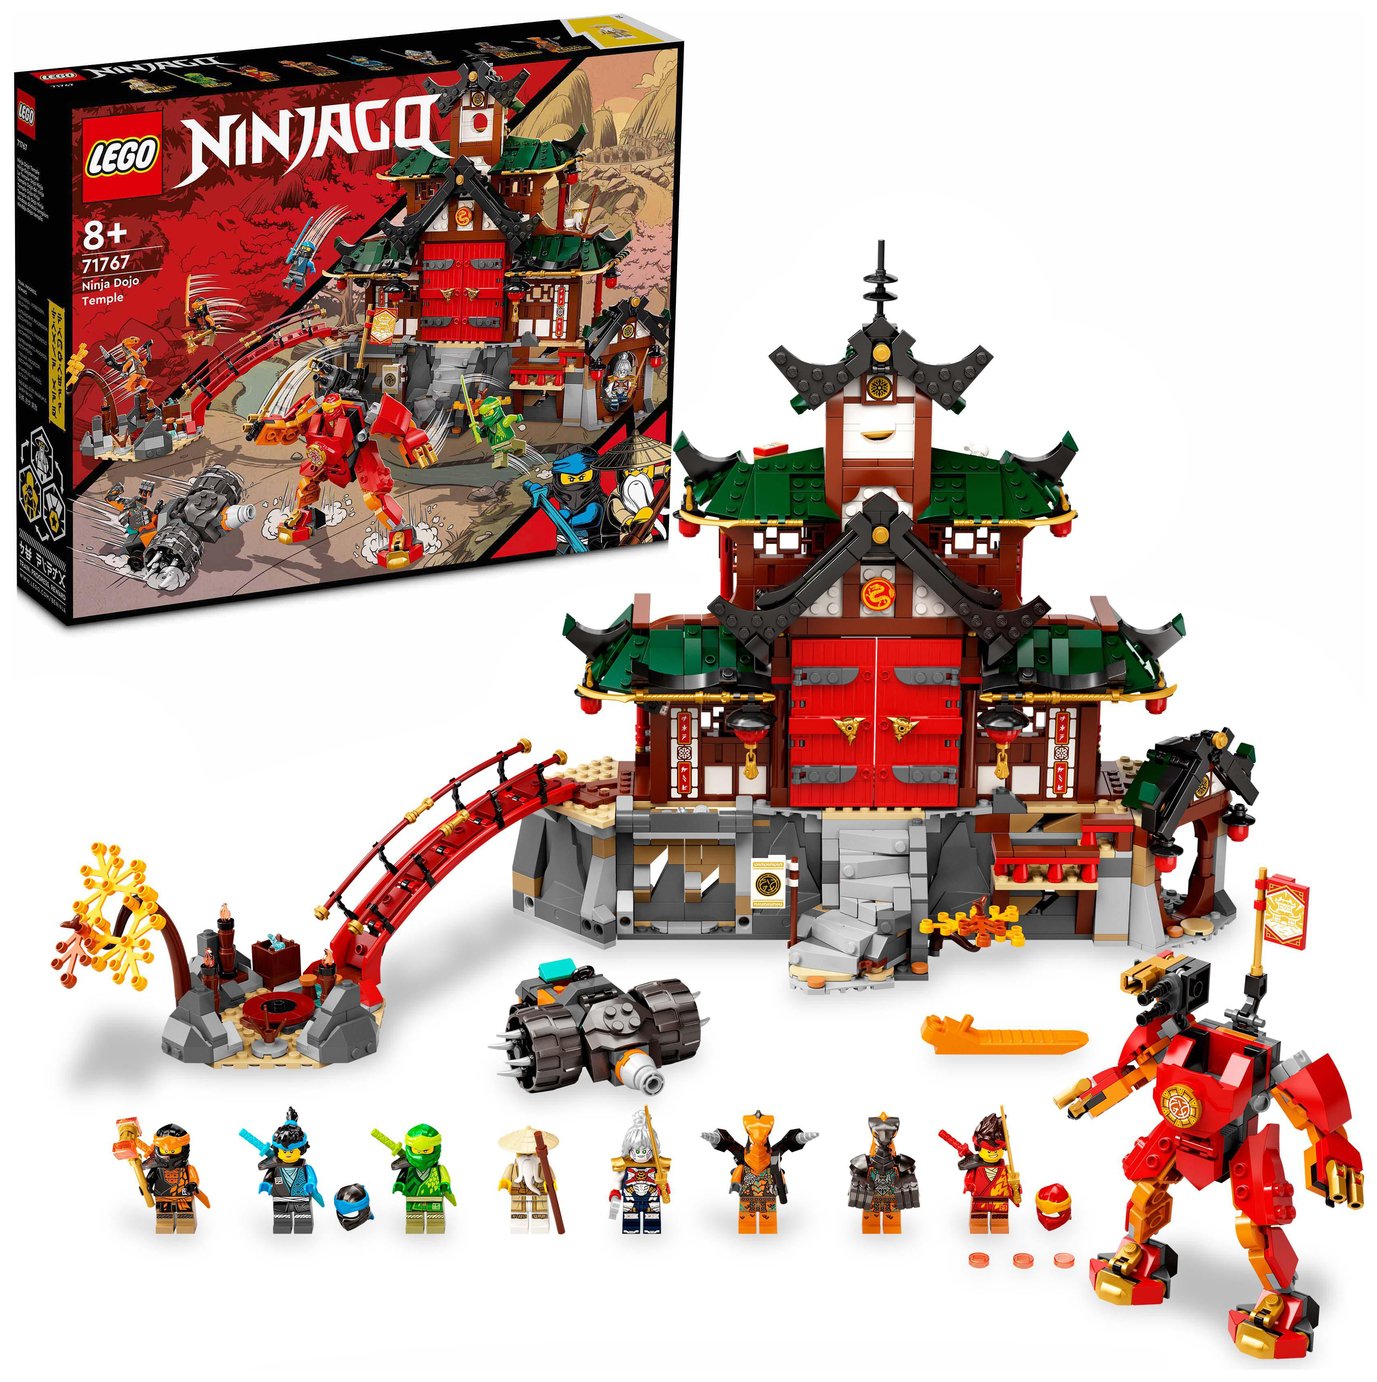 LEGO NINJAGO Ninja Dojo Temple Master of Spinjitzu Set 71767